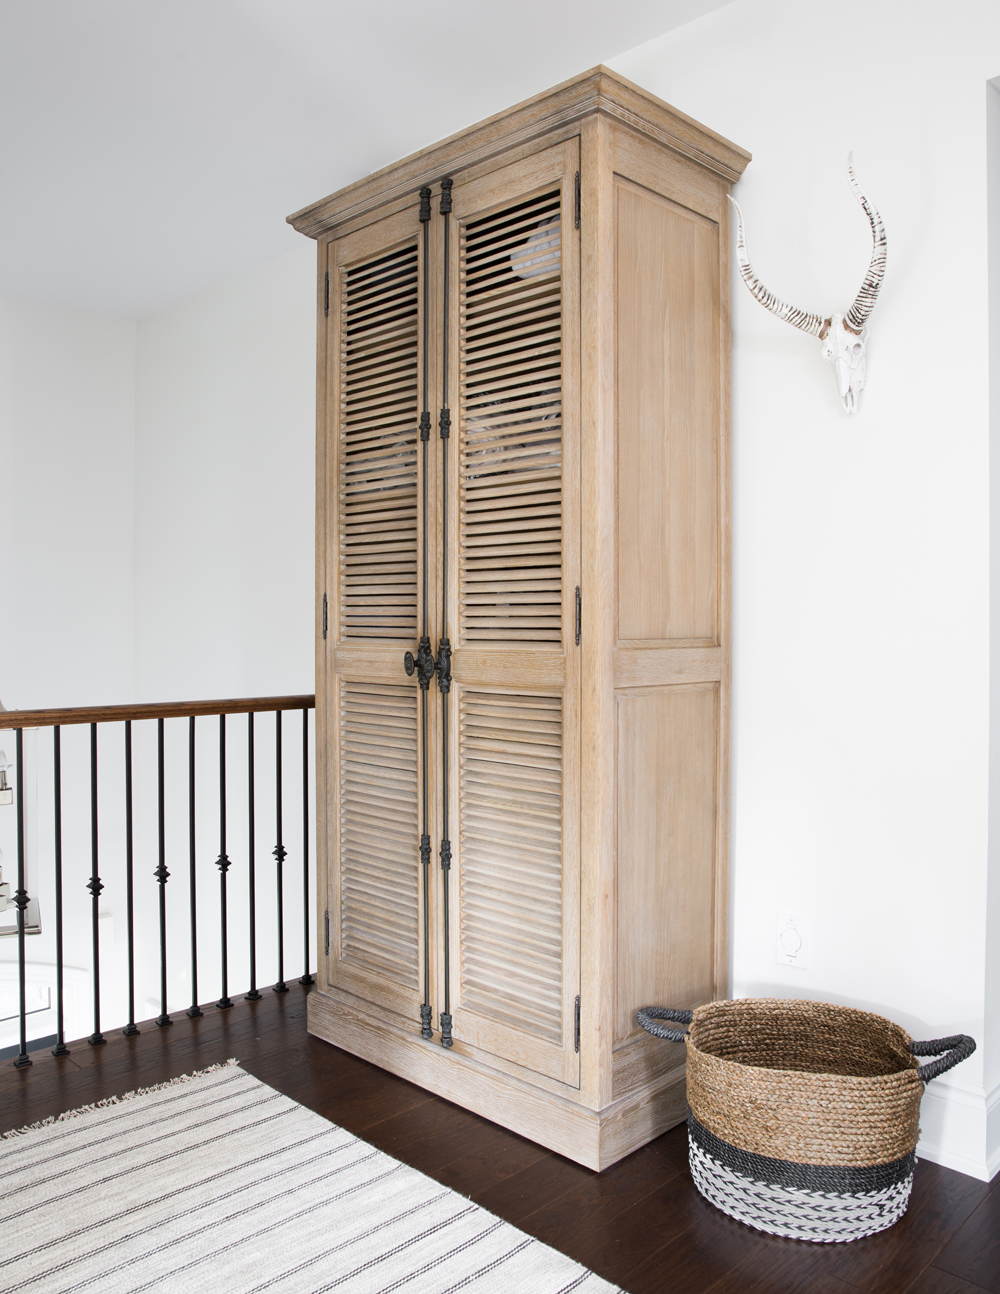 wood cabinet with louvered door, basket on floor